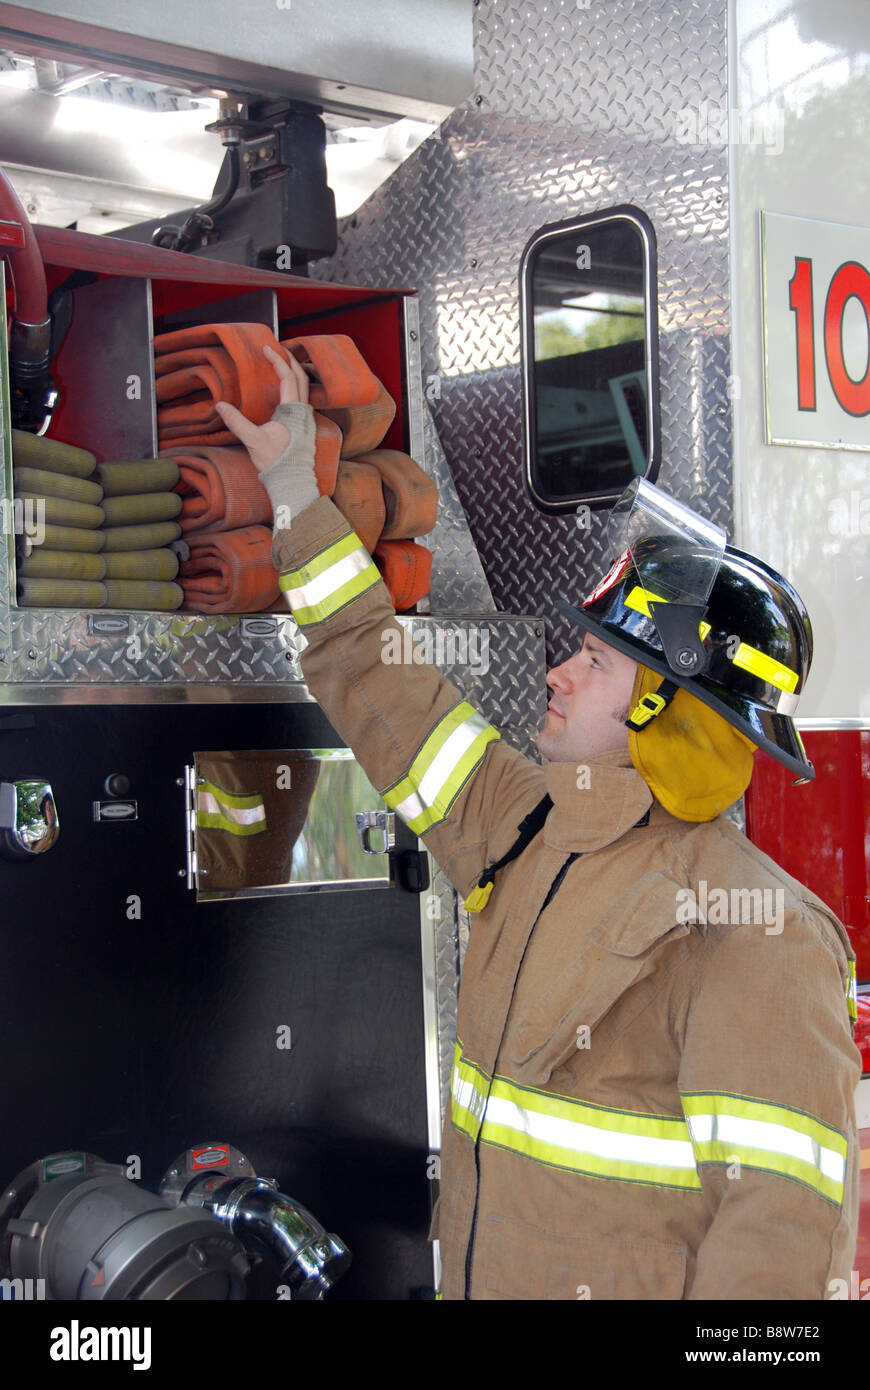 Male Firefighter reaching for fire hose on fire truck wearing bunker gear and helmet Stock Photo